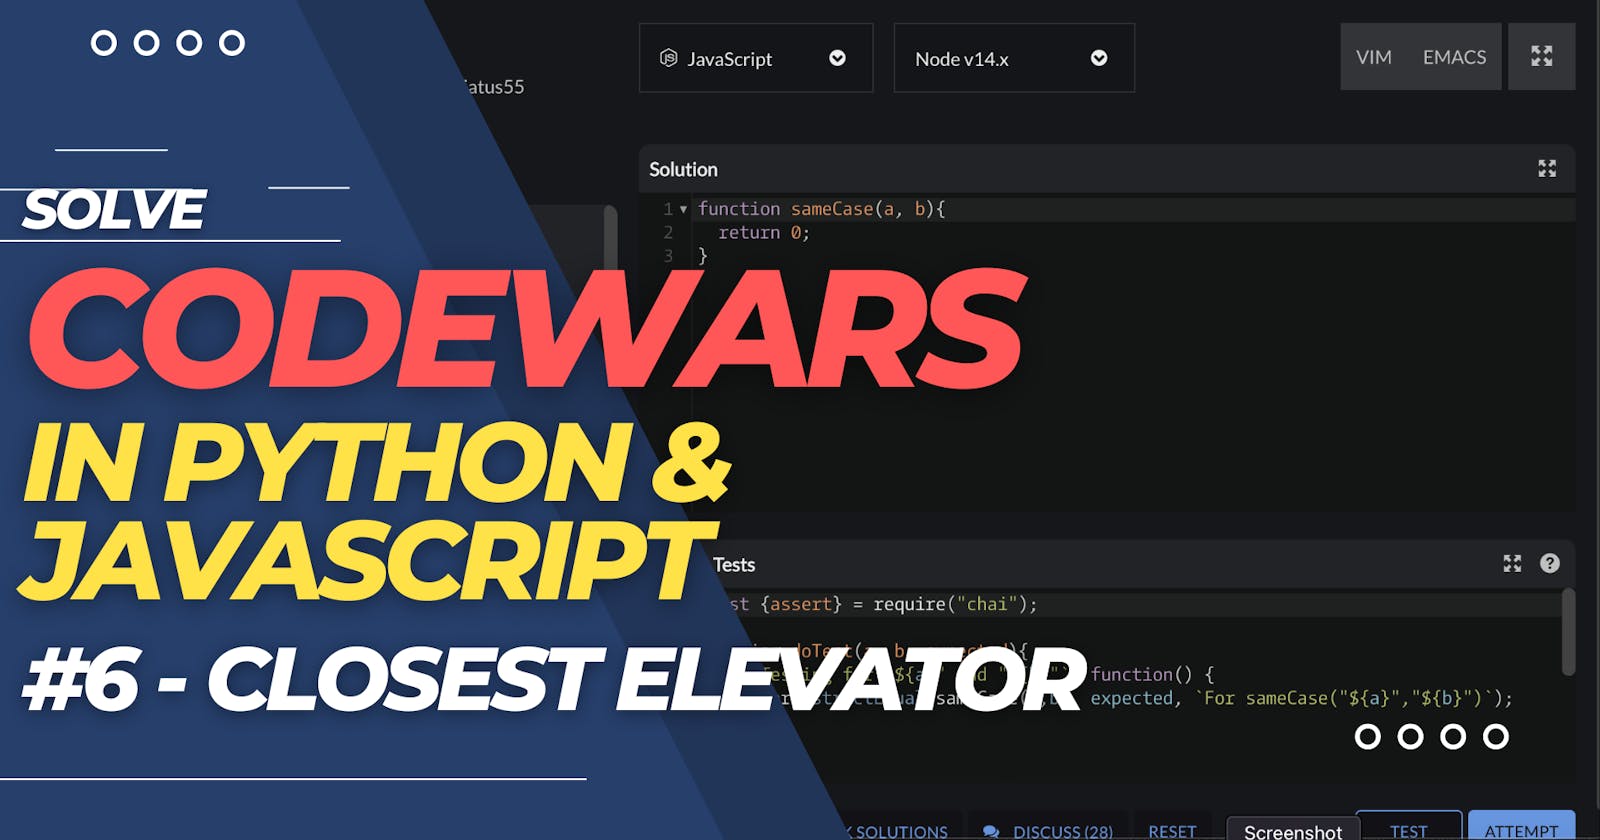 CODEWARS #6 - Closest Elevator (solved in Python & Javascript)